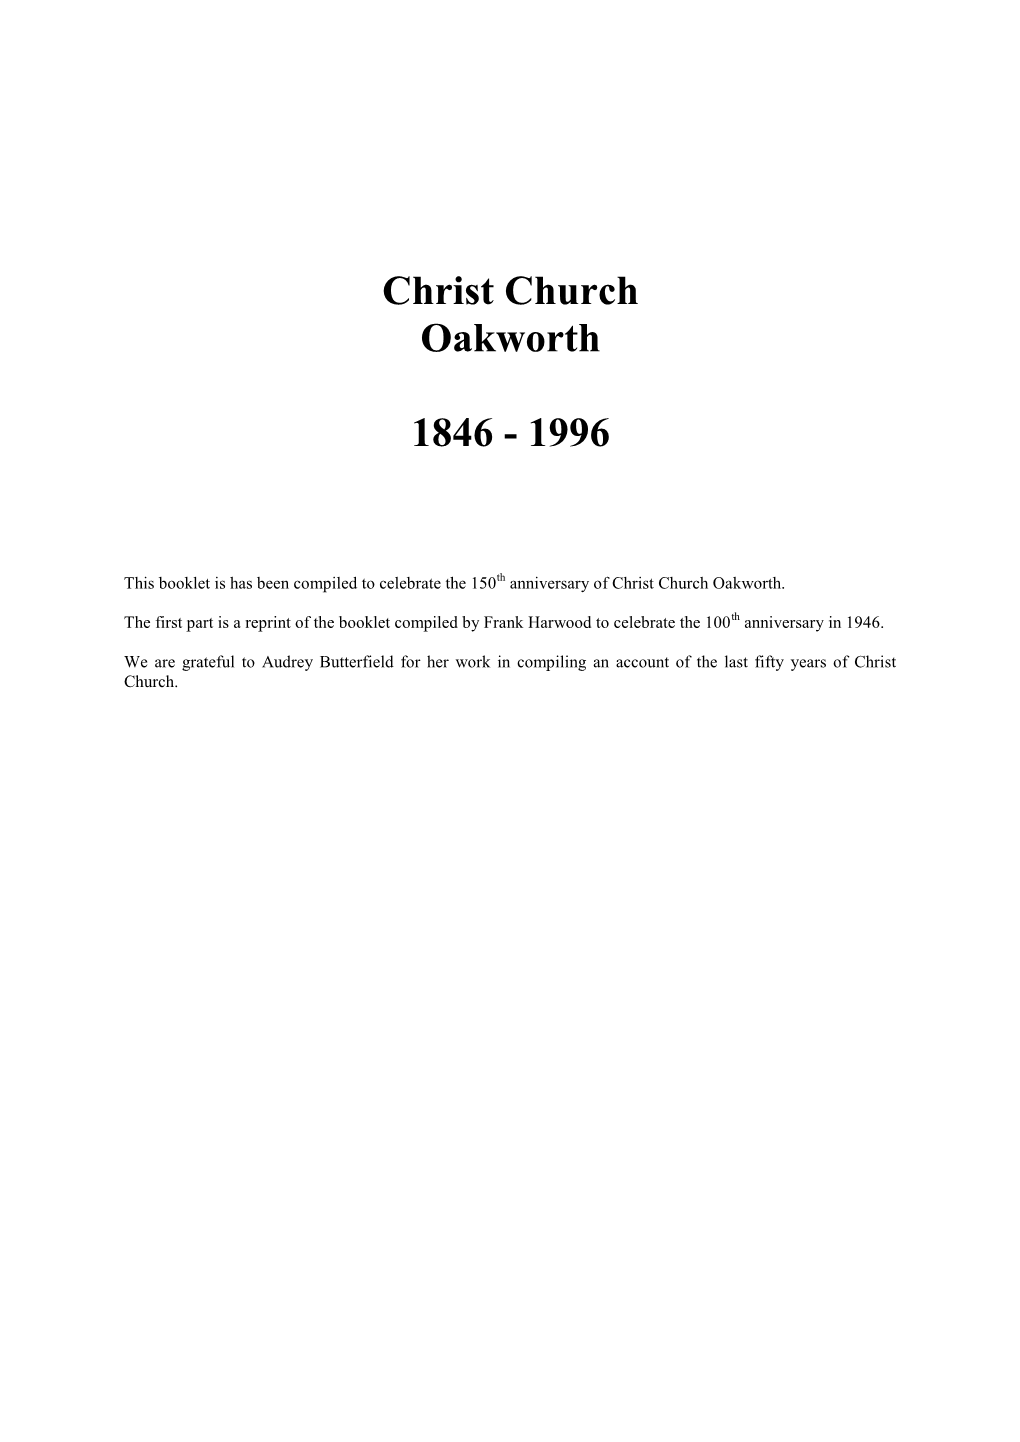 Christ Church Oakworth 1846